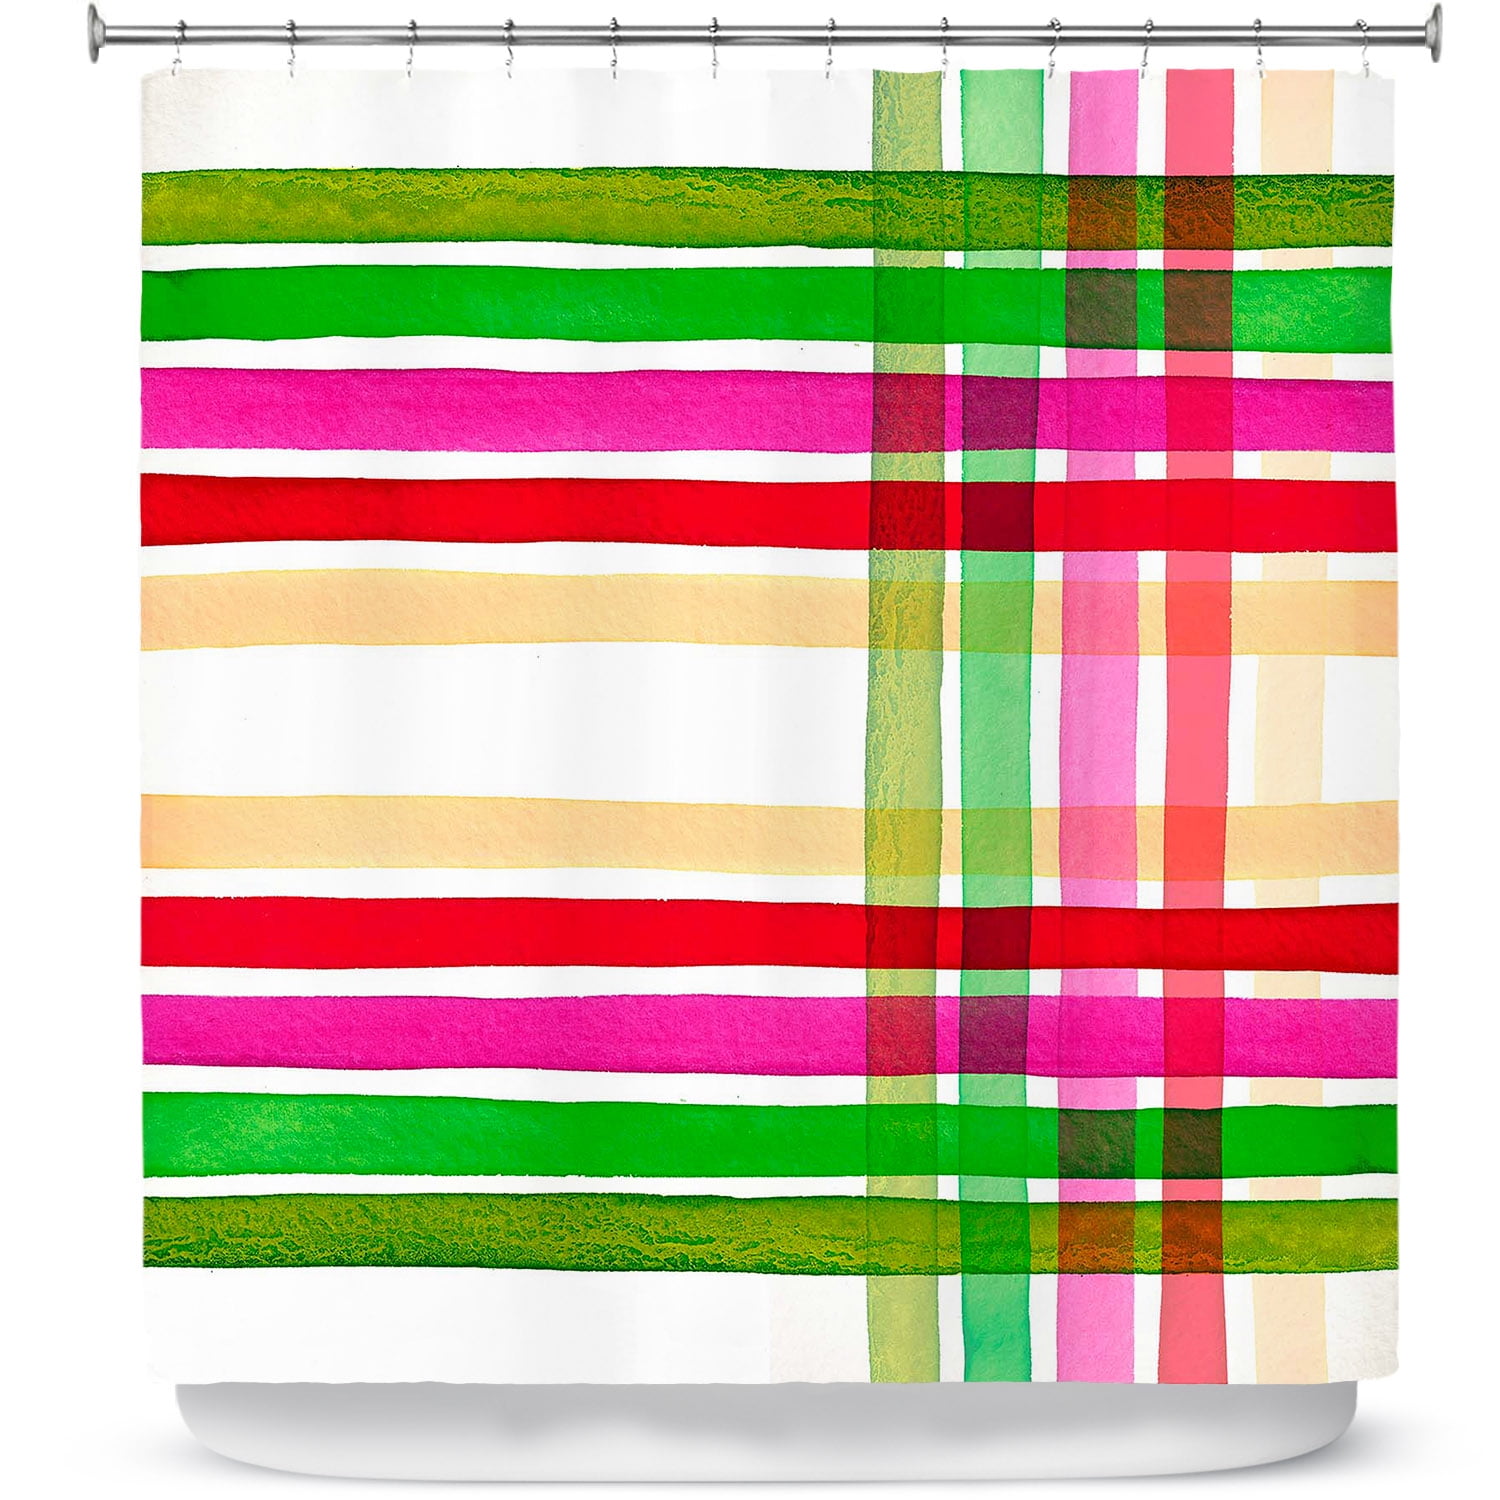 69 x 70 Shower Curtain Kess InHouse Frederic Levy-Hadida Fancy Stripes Green 